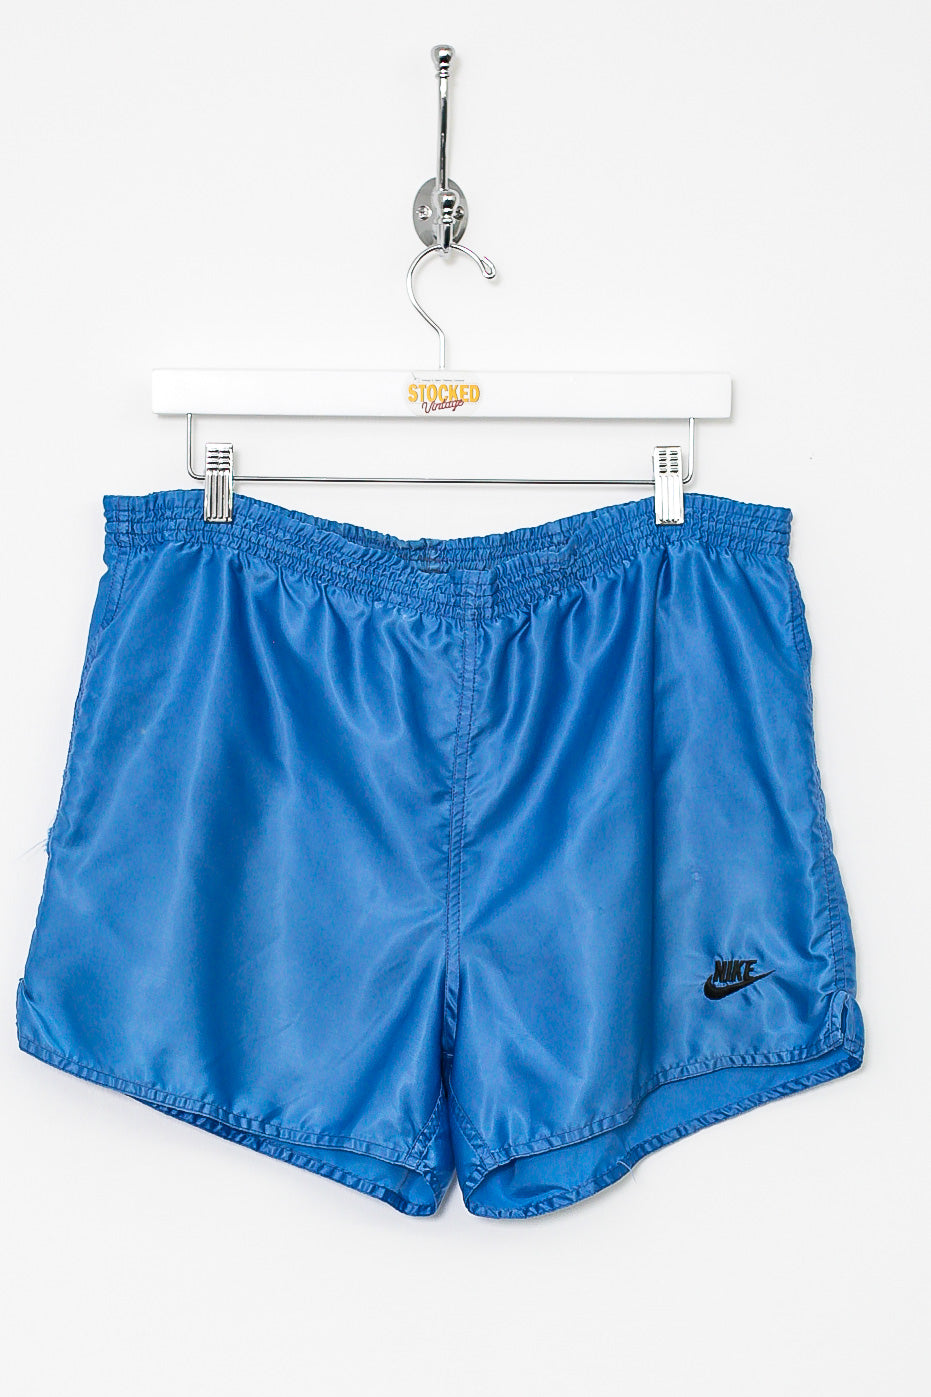 90s Nike Shorts (M)